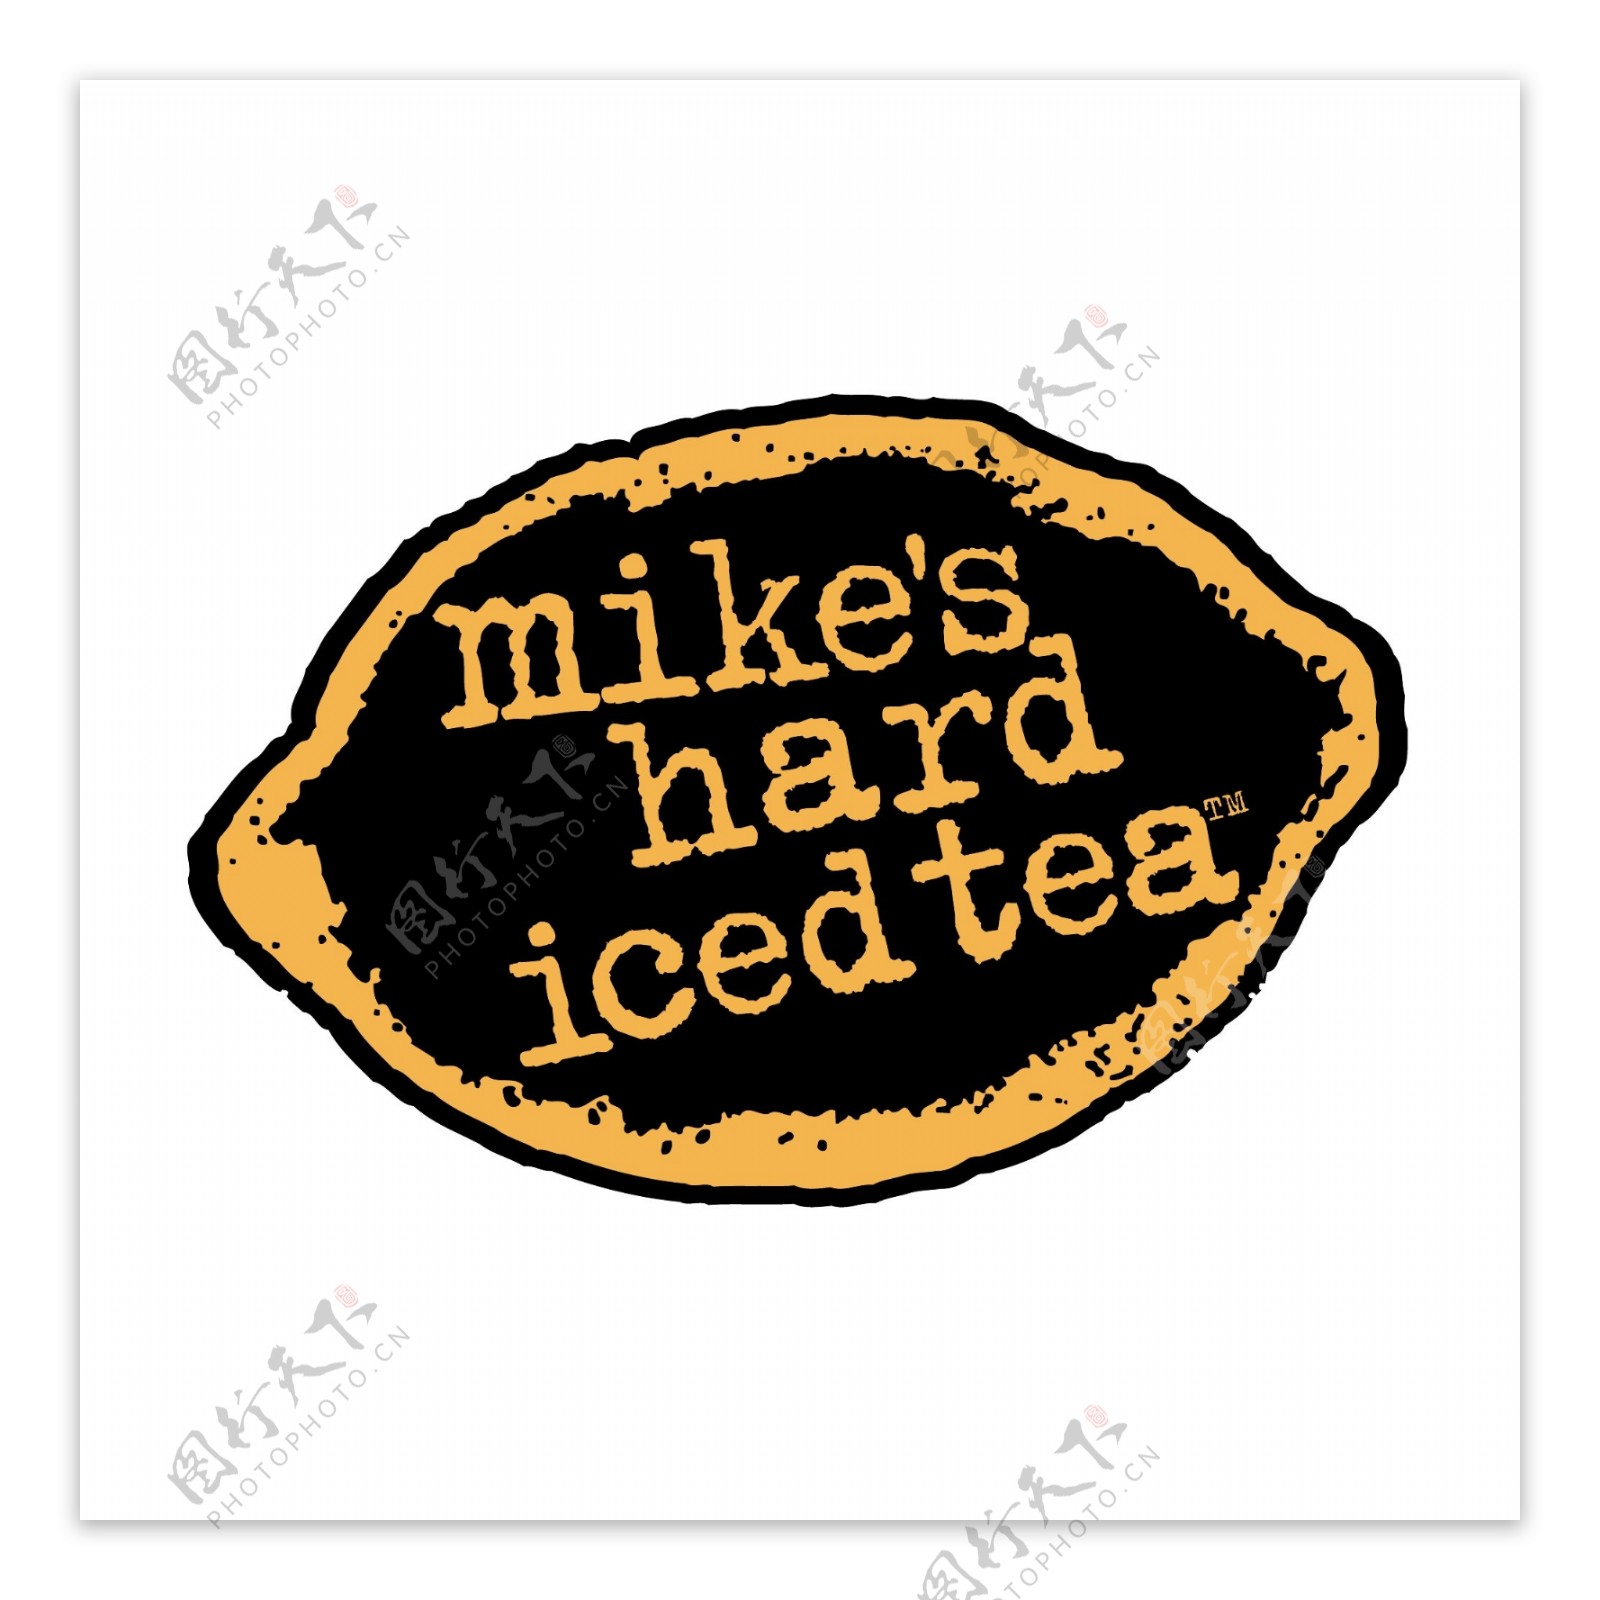 MIKES硬冰茶